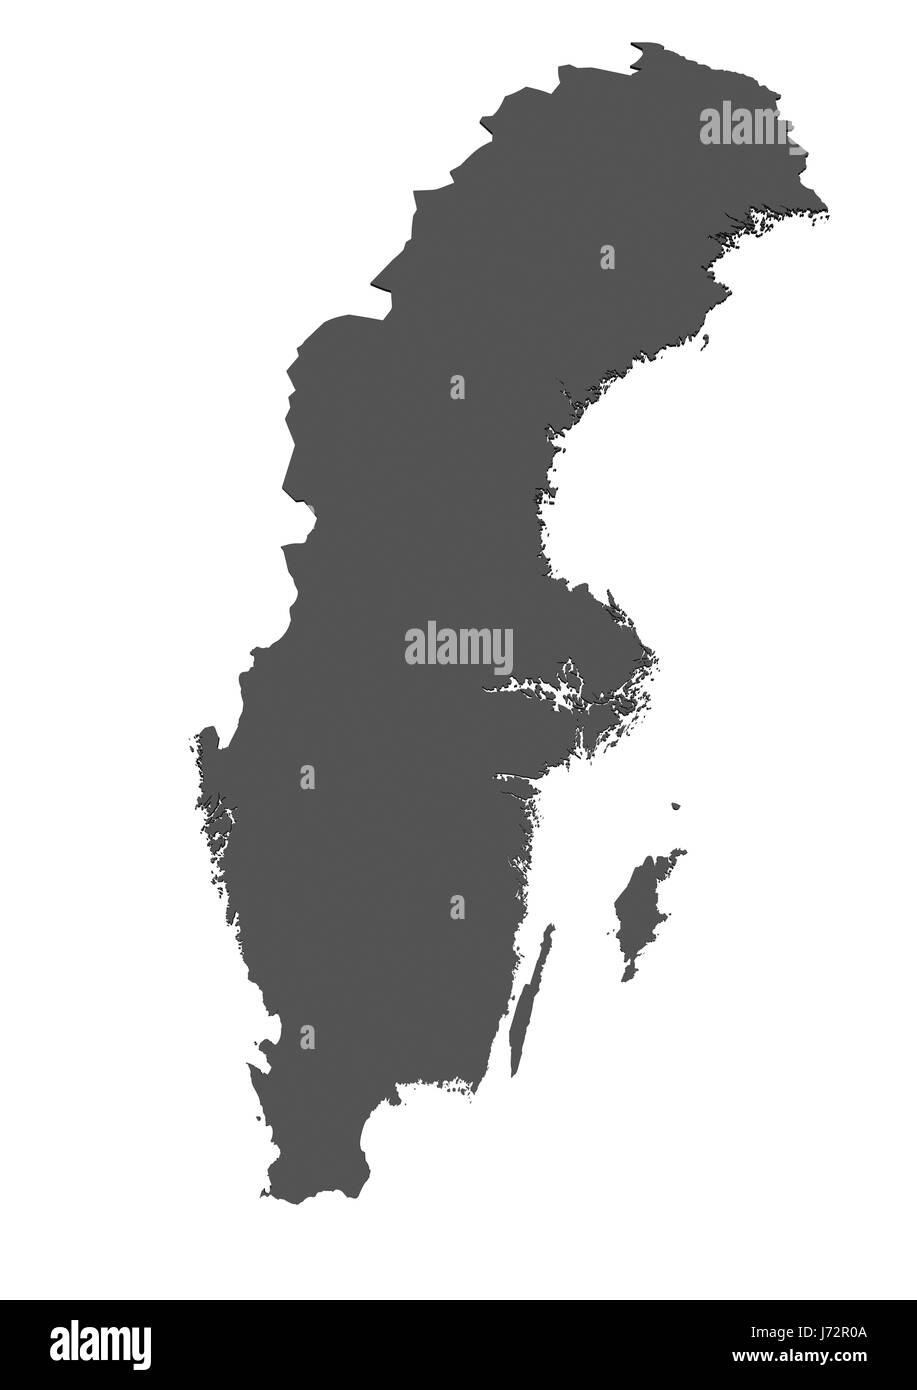 sweden border shape card outline scandinavia atlas map of the world map Stock Photo